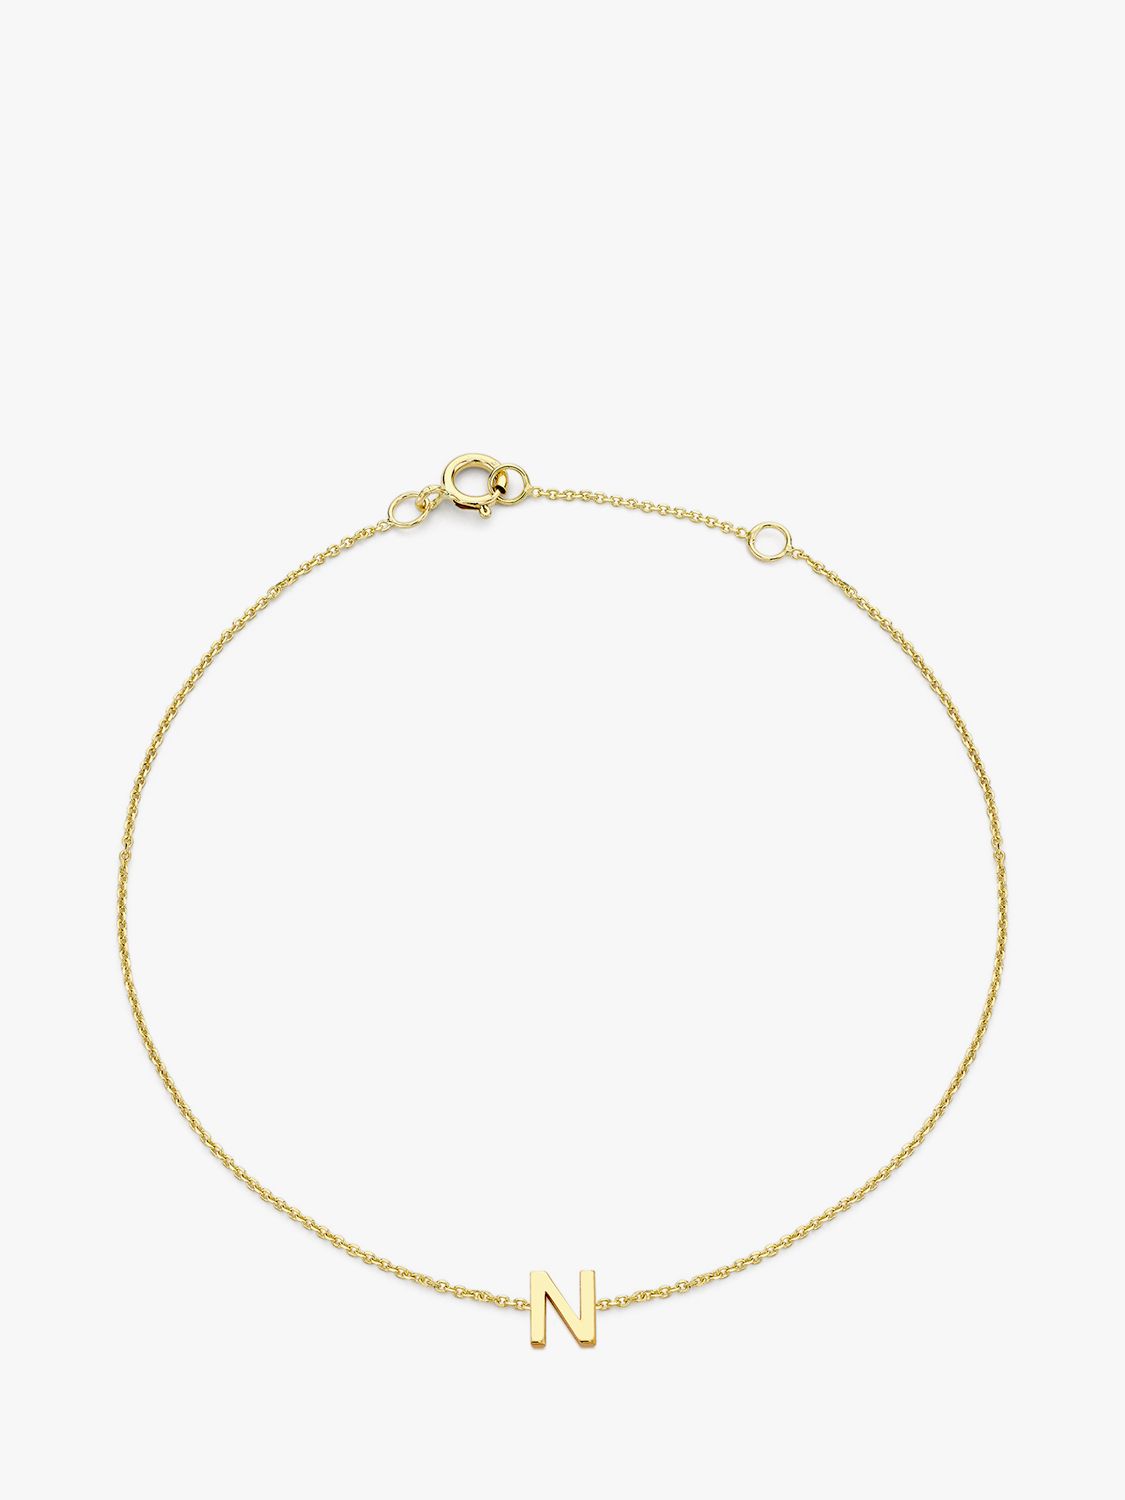 IBB 9ct Yellow Gold Initial Bracelet, N